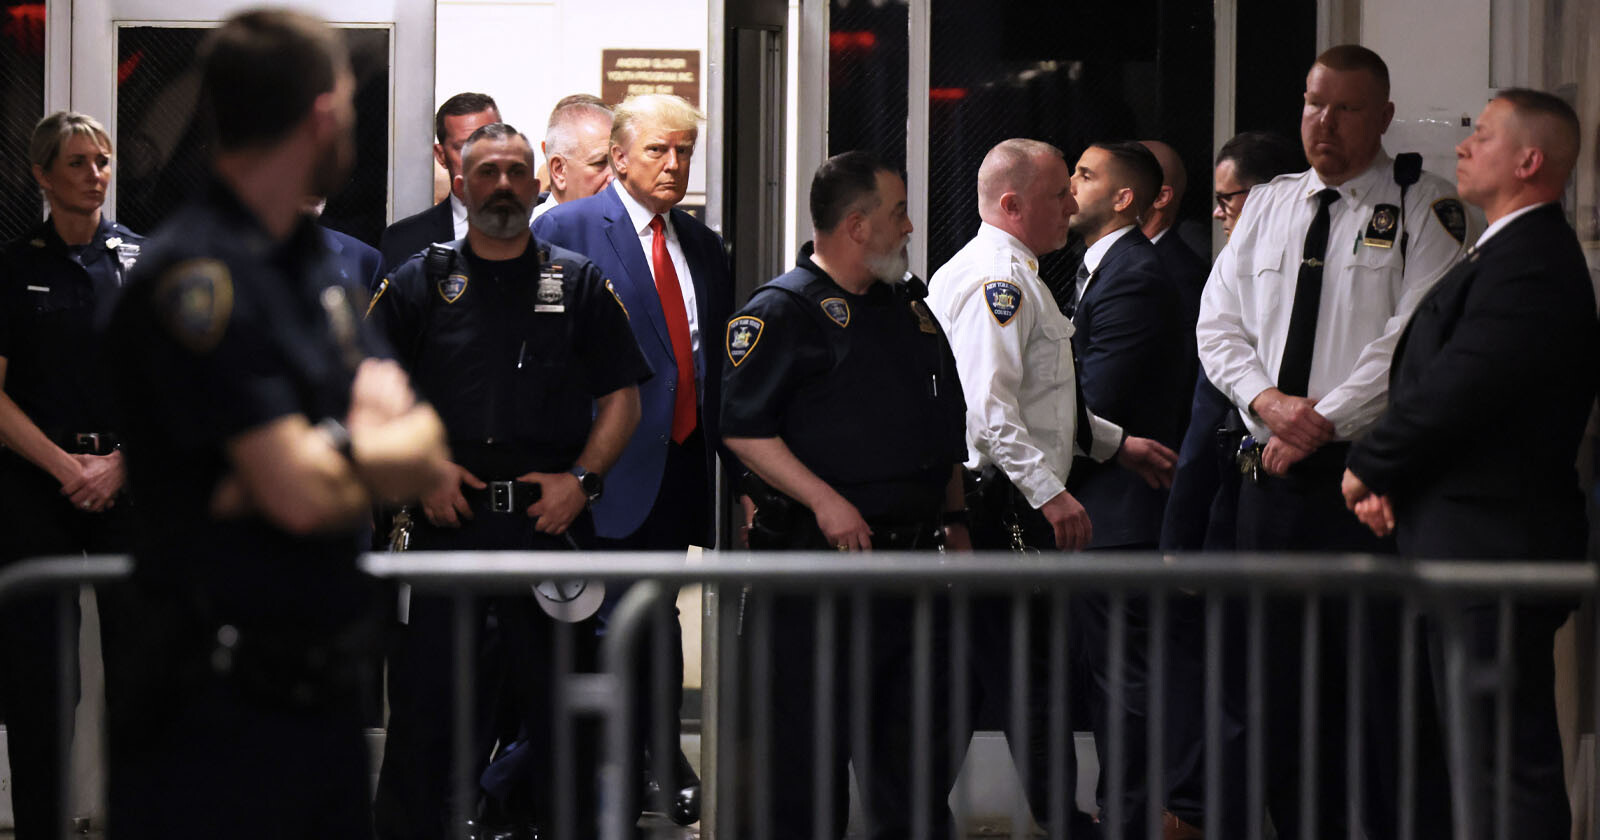 Pulitzer Prize-Winning Photographer Discusses Capturing Iconic Trump Arrest Photo